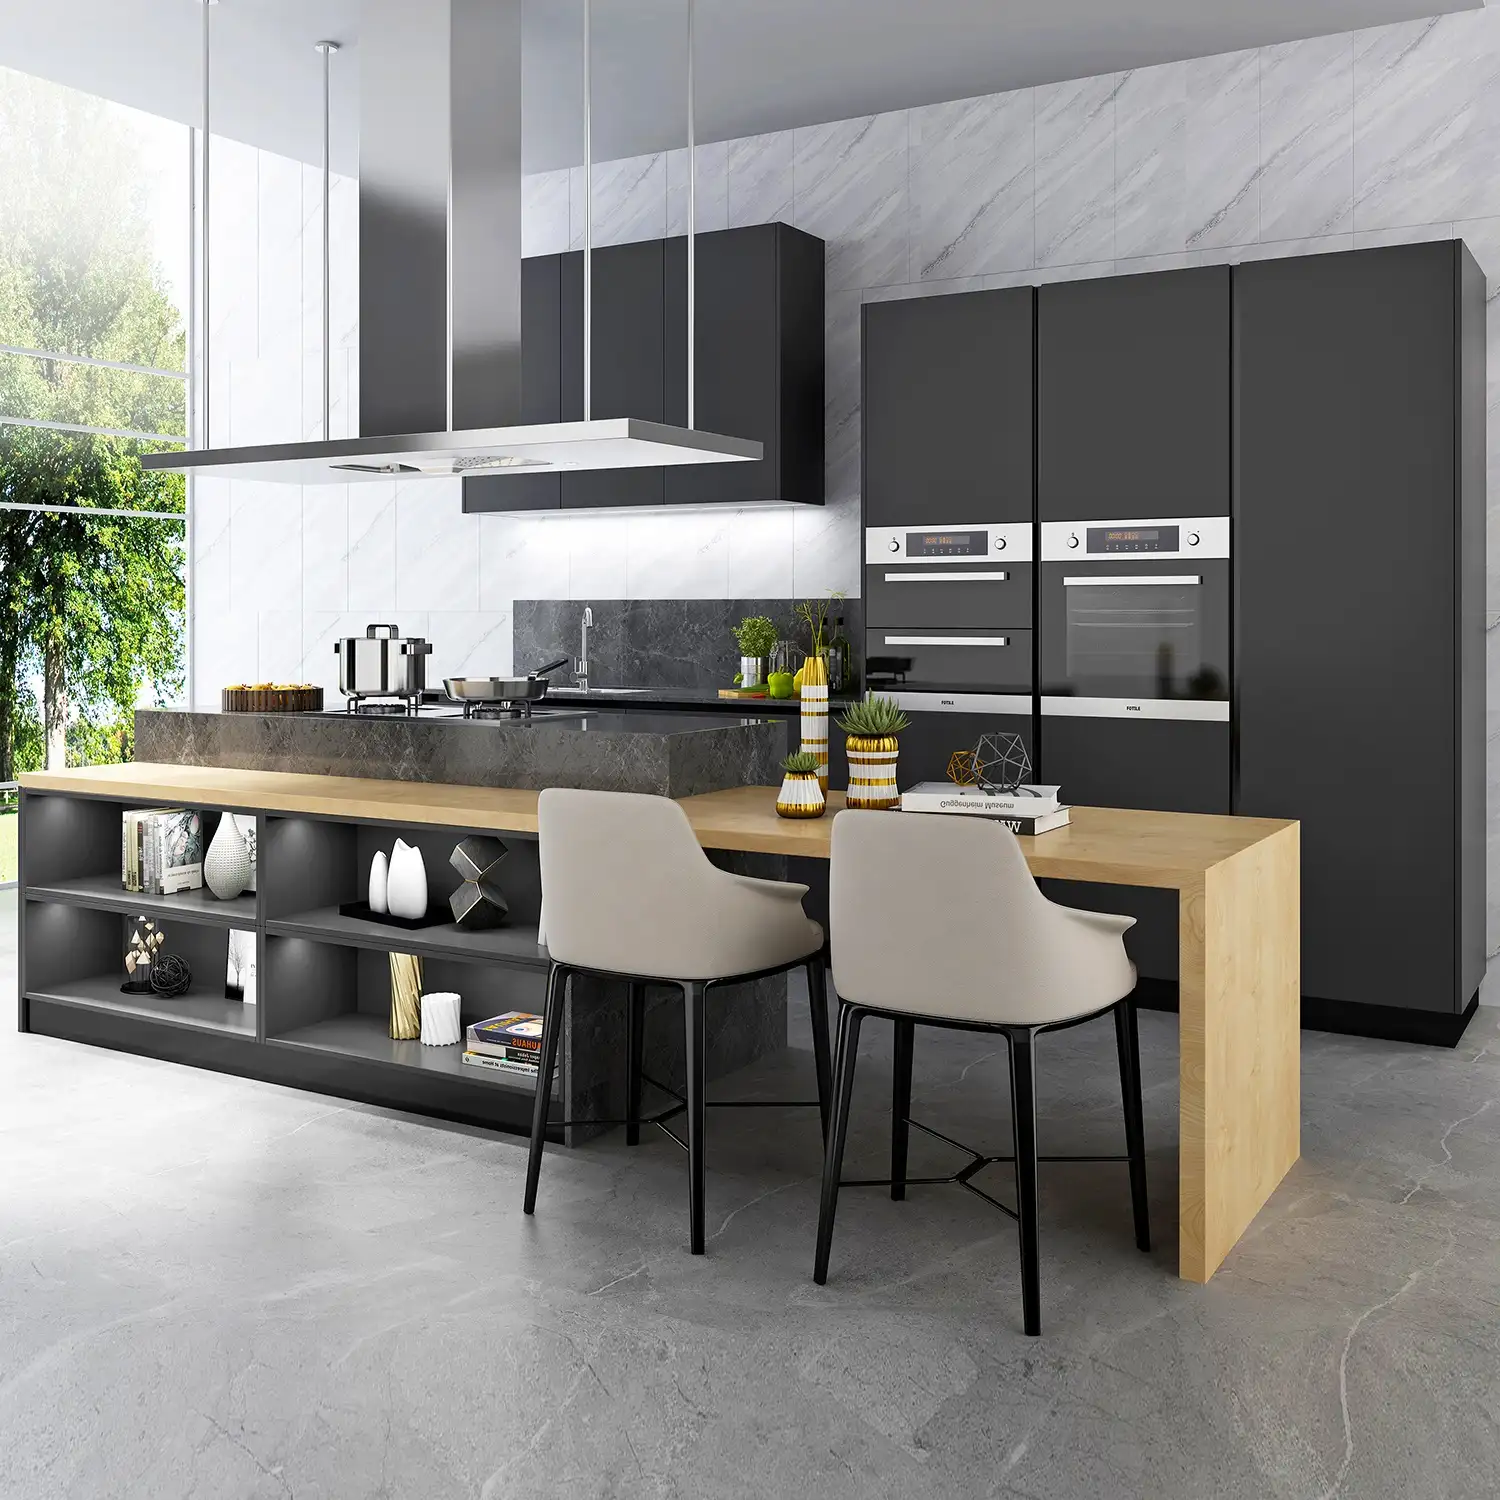 PA modern designs high gloss lacquer modular kitchen cabinets